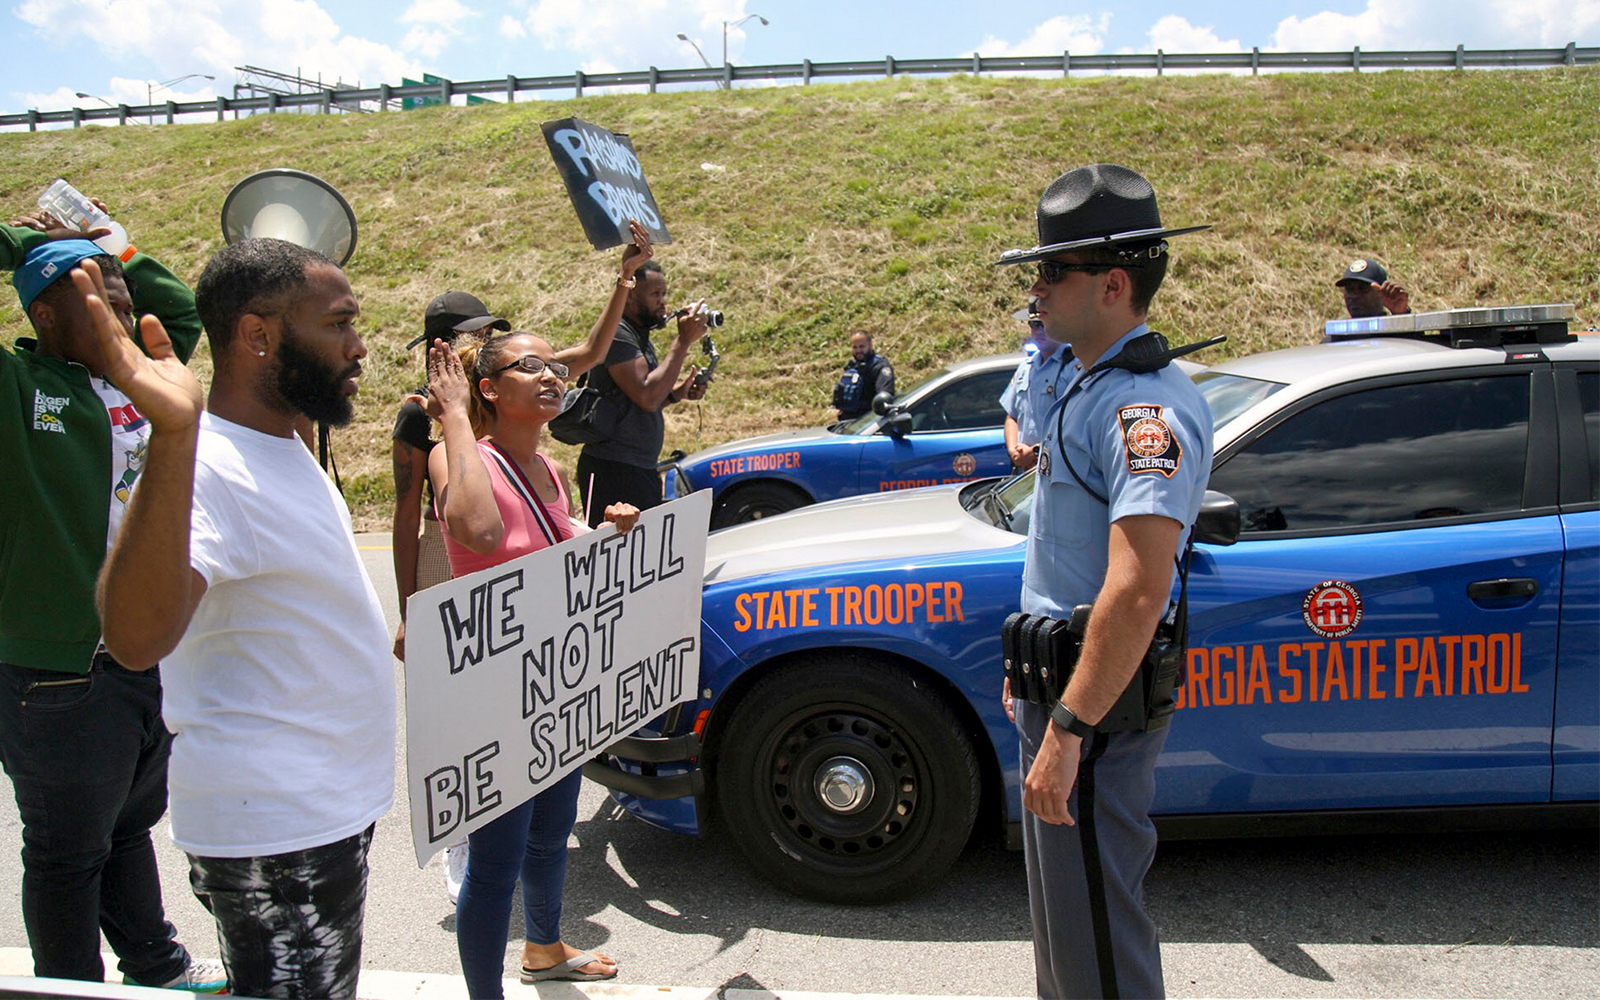 Protestors gather near a Wendy’s restaurant where police killed a black man, Atlanta, Georgia, June 13, 2020. (Steve Schaefer/Atlanta Journal-Constitution via AP)